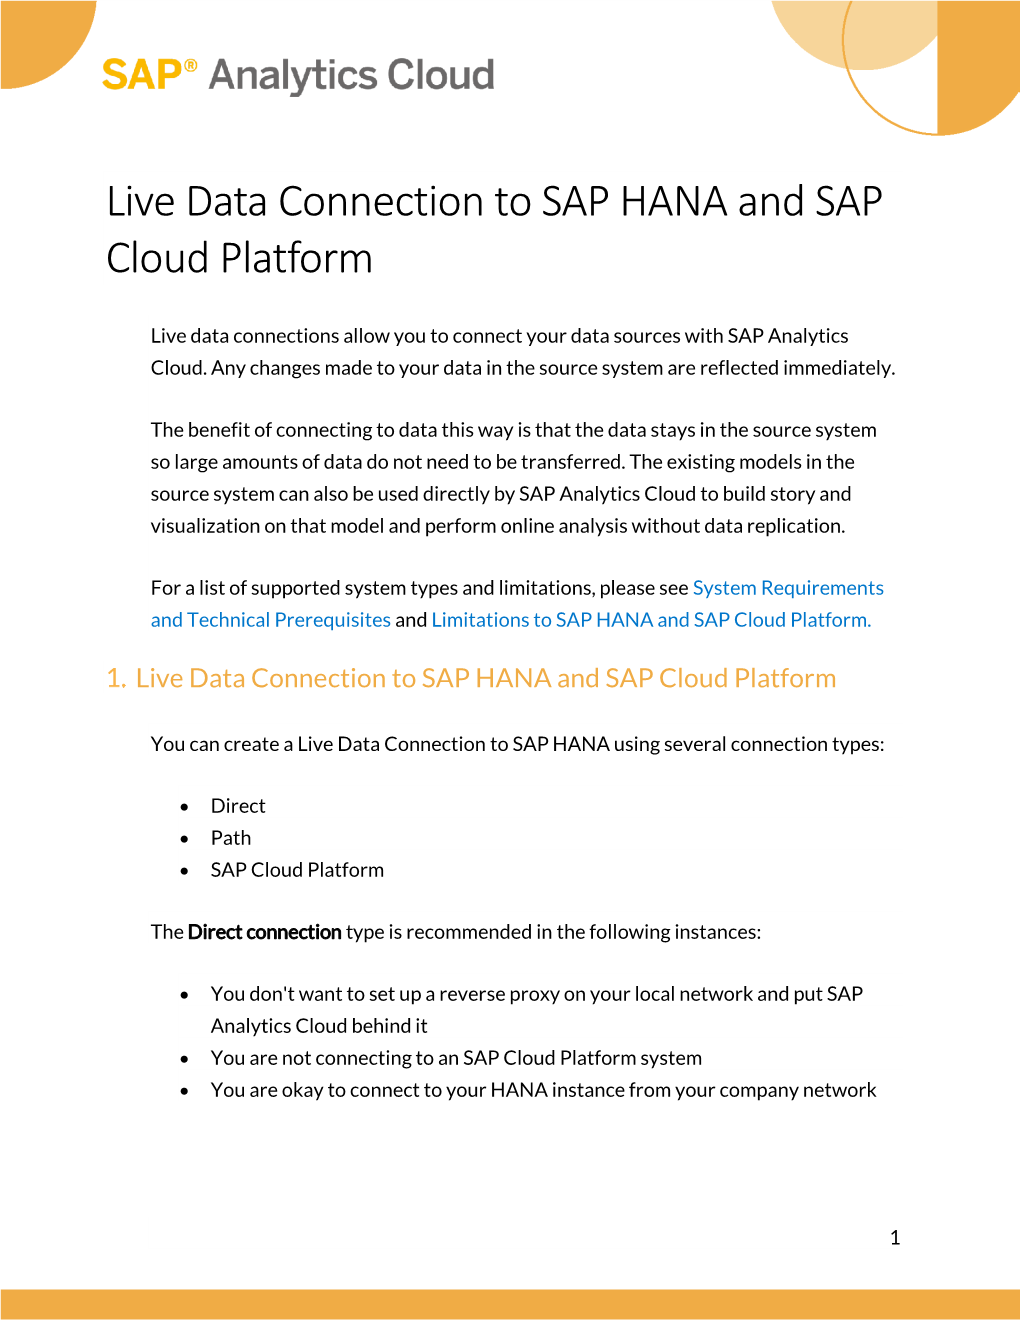 Live Data Connection to SAP HANA and SAP Cloud Platform